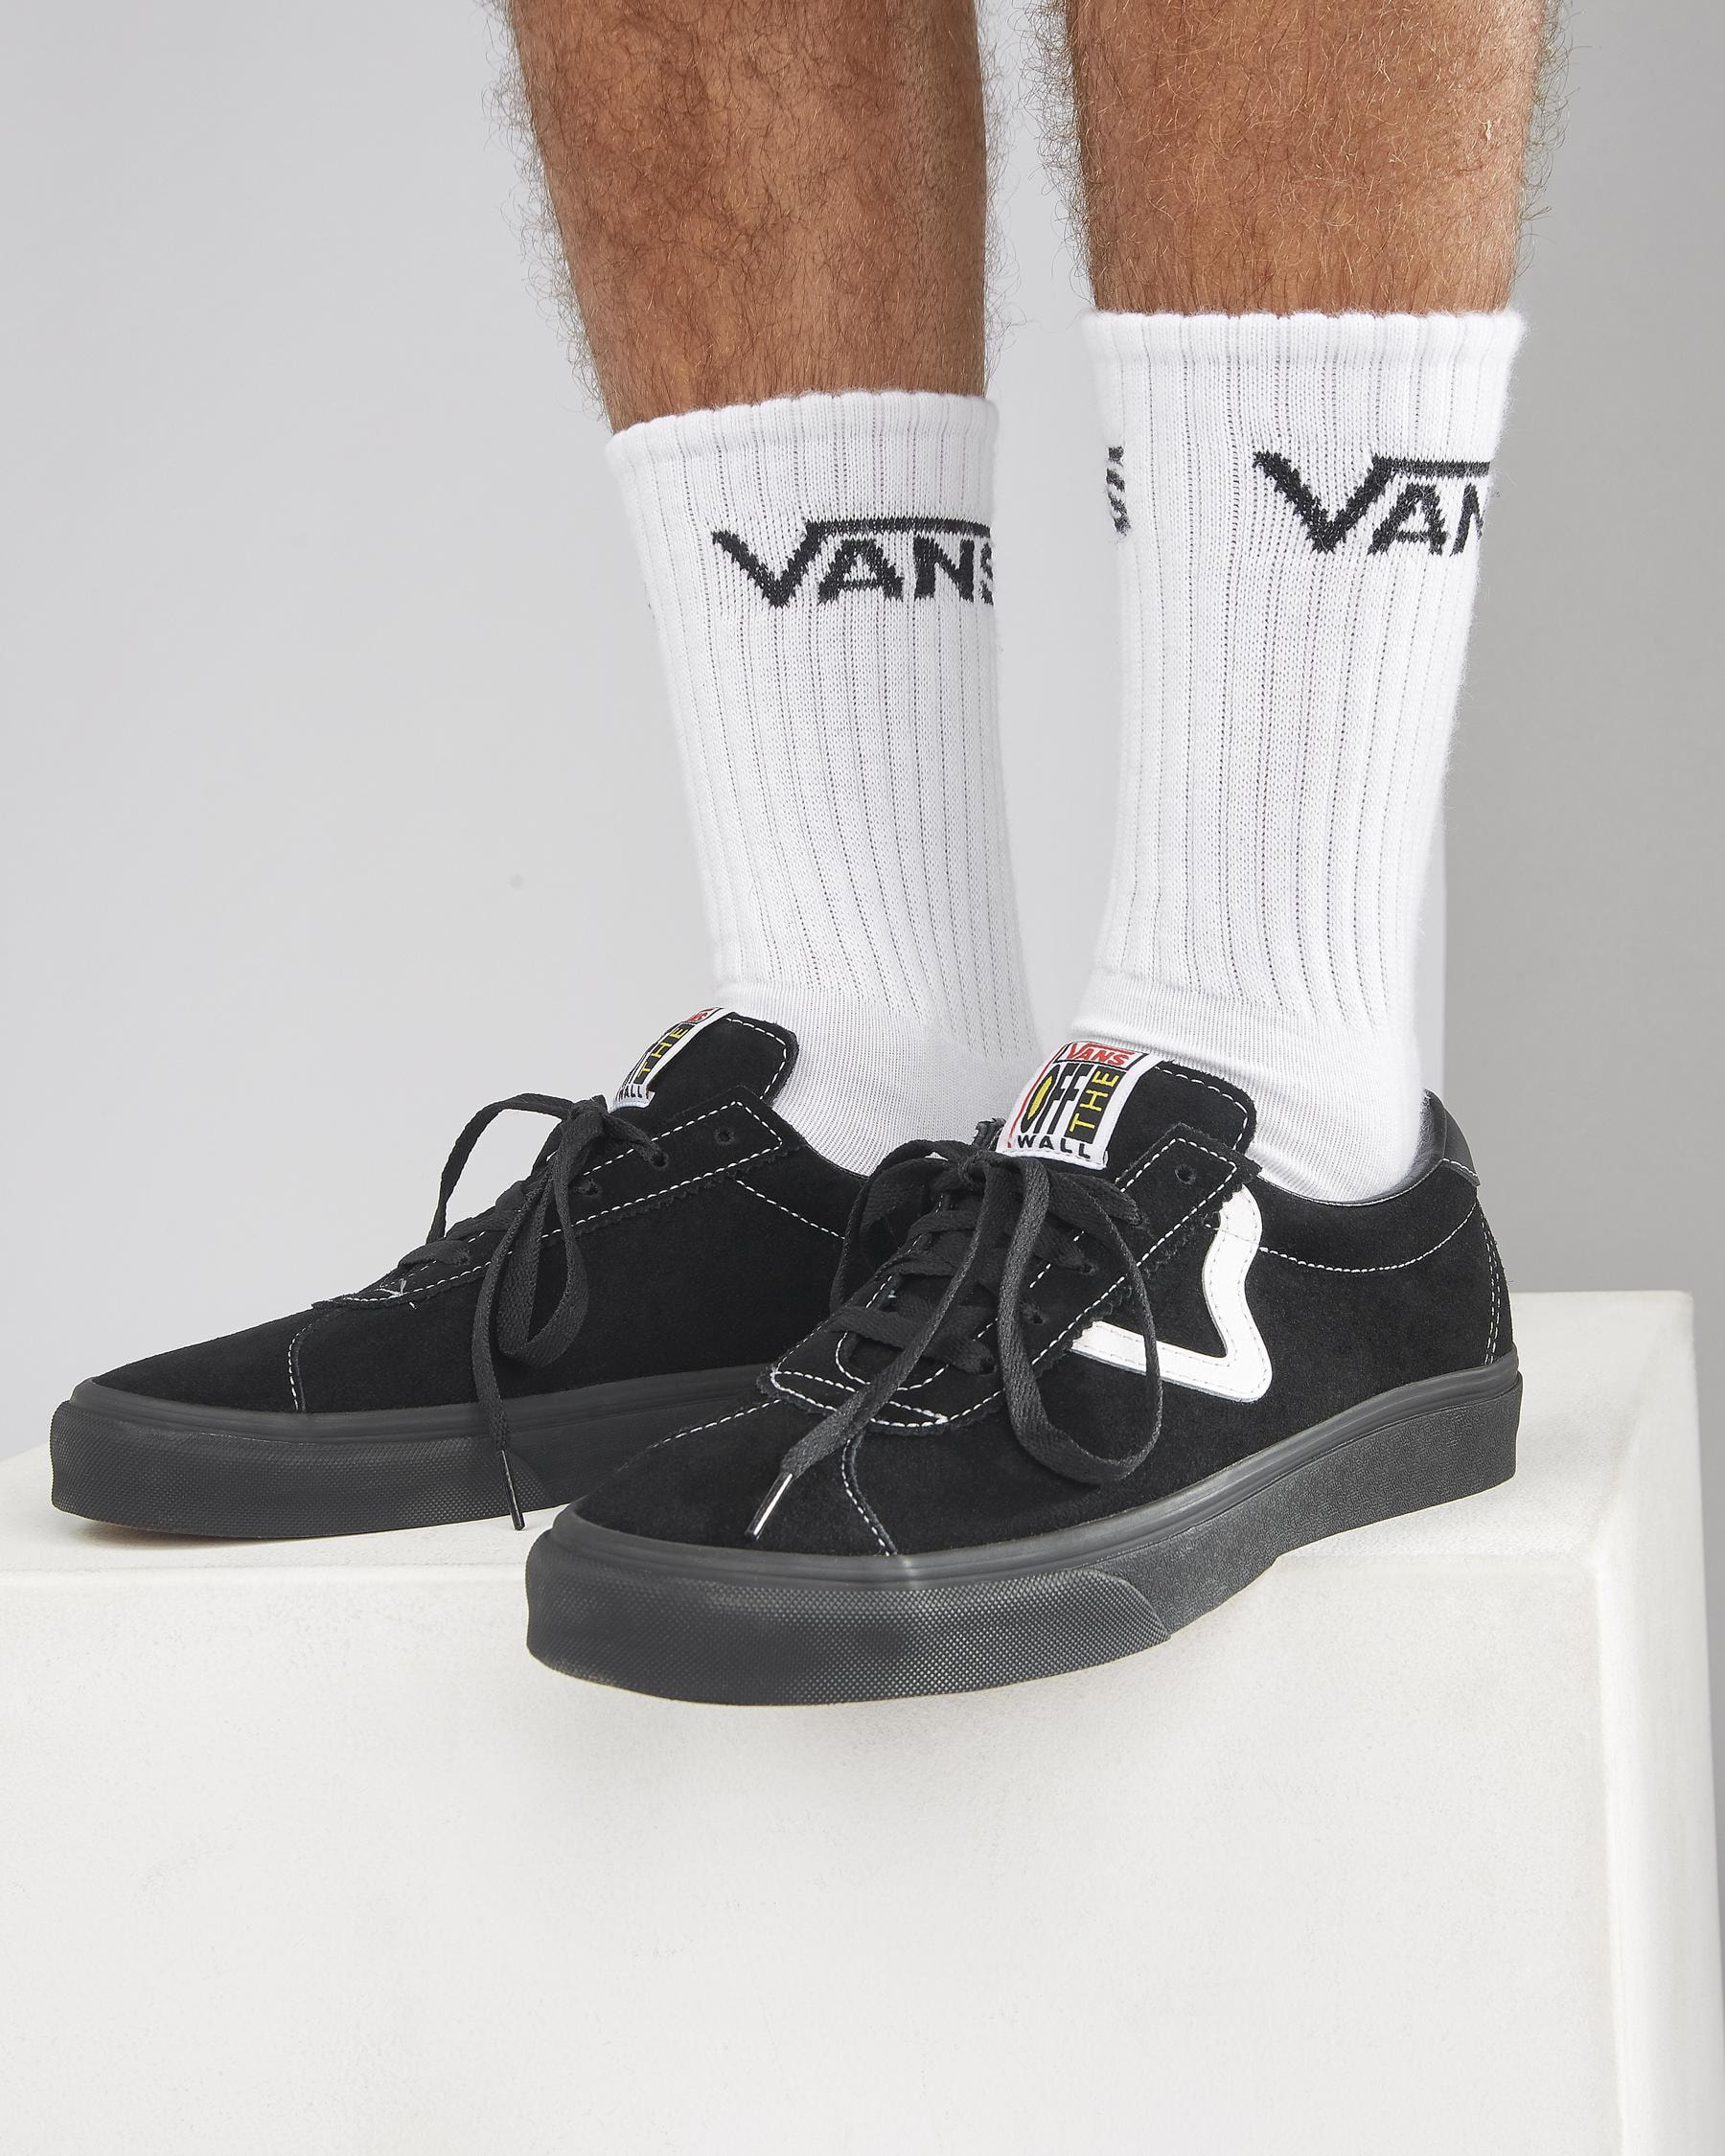 Vans Sport Shoes In Black/black - Fast Shipping & Easy Returns - City ...